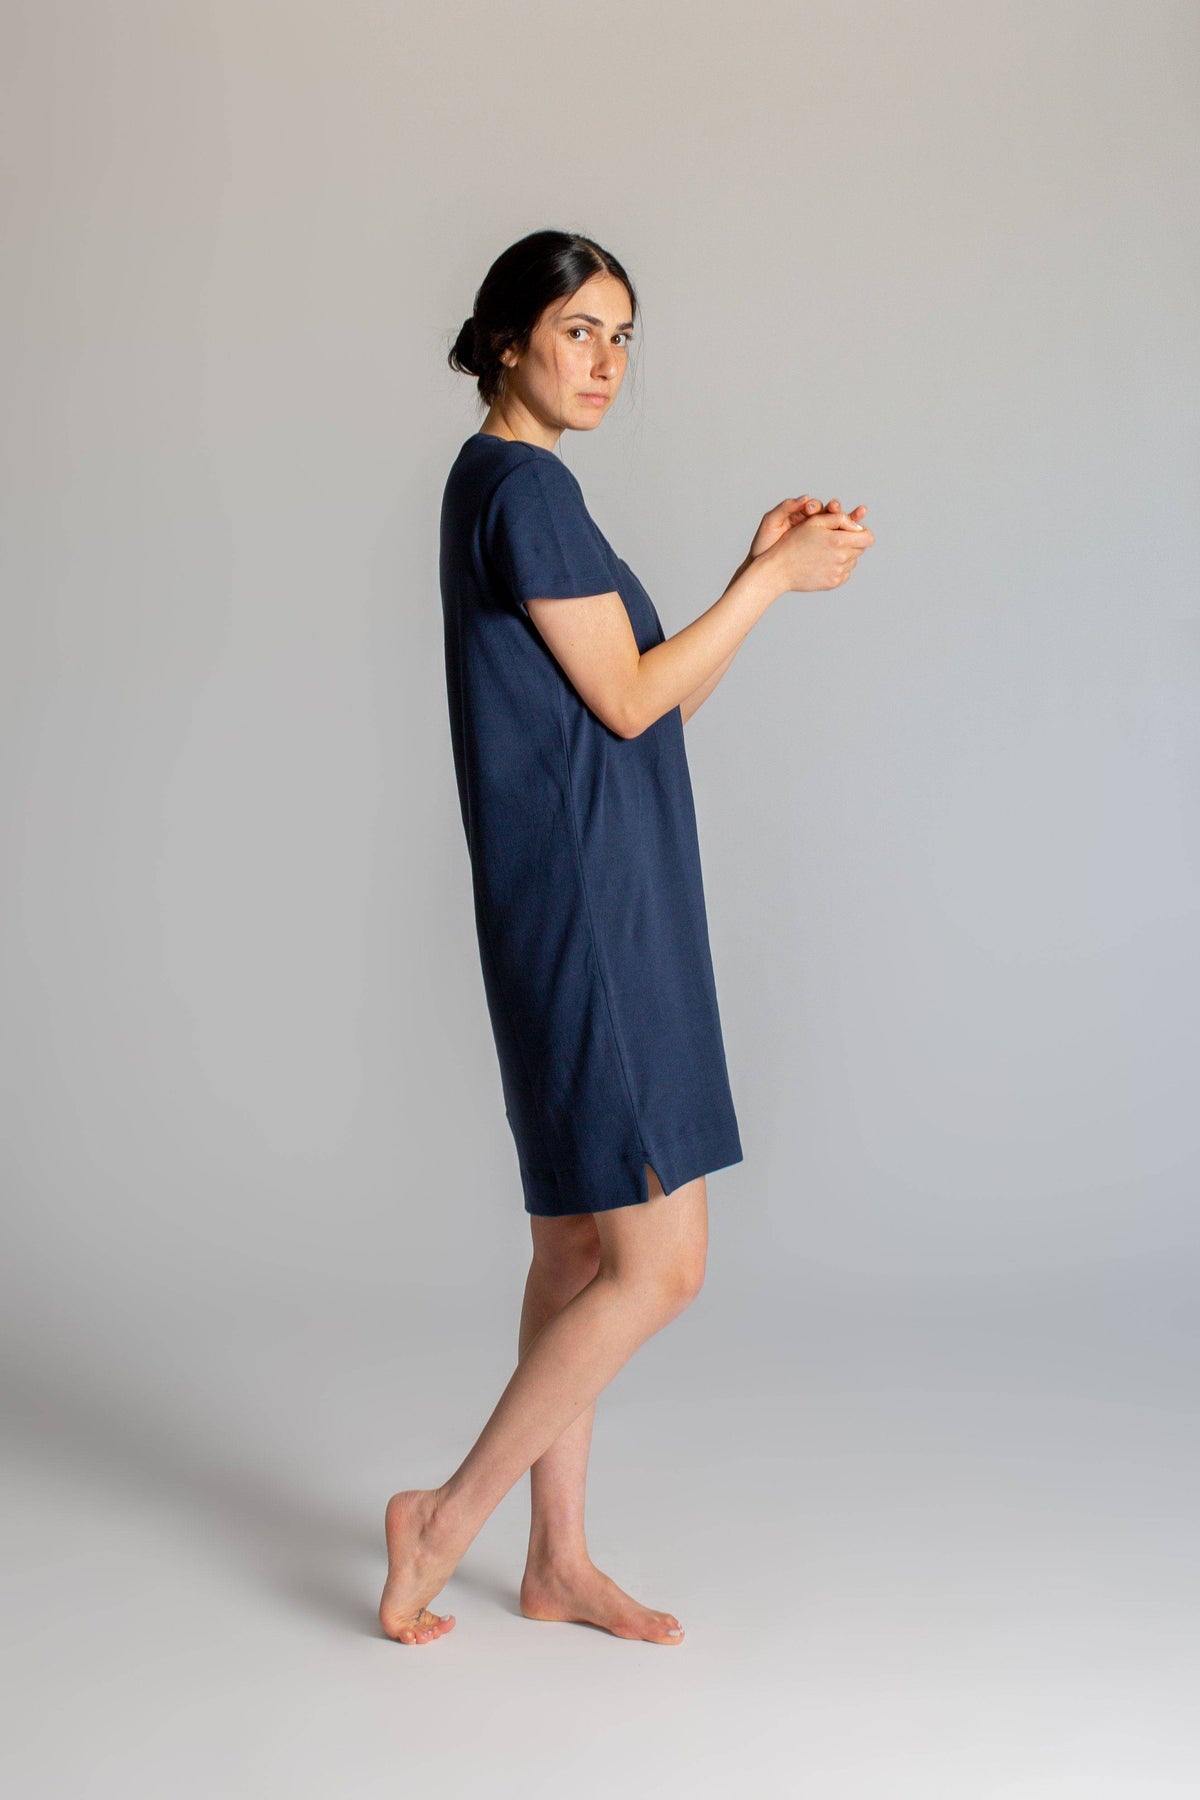 Limited Edition Box Dress - womens clothing - Ripple Yoga Wear